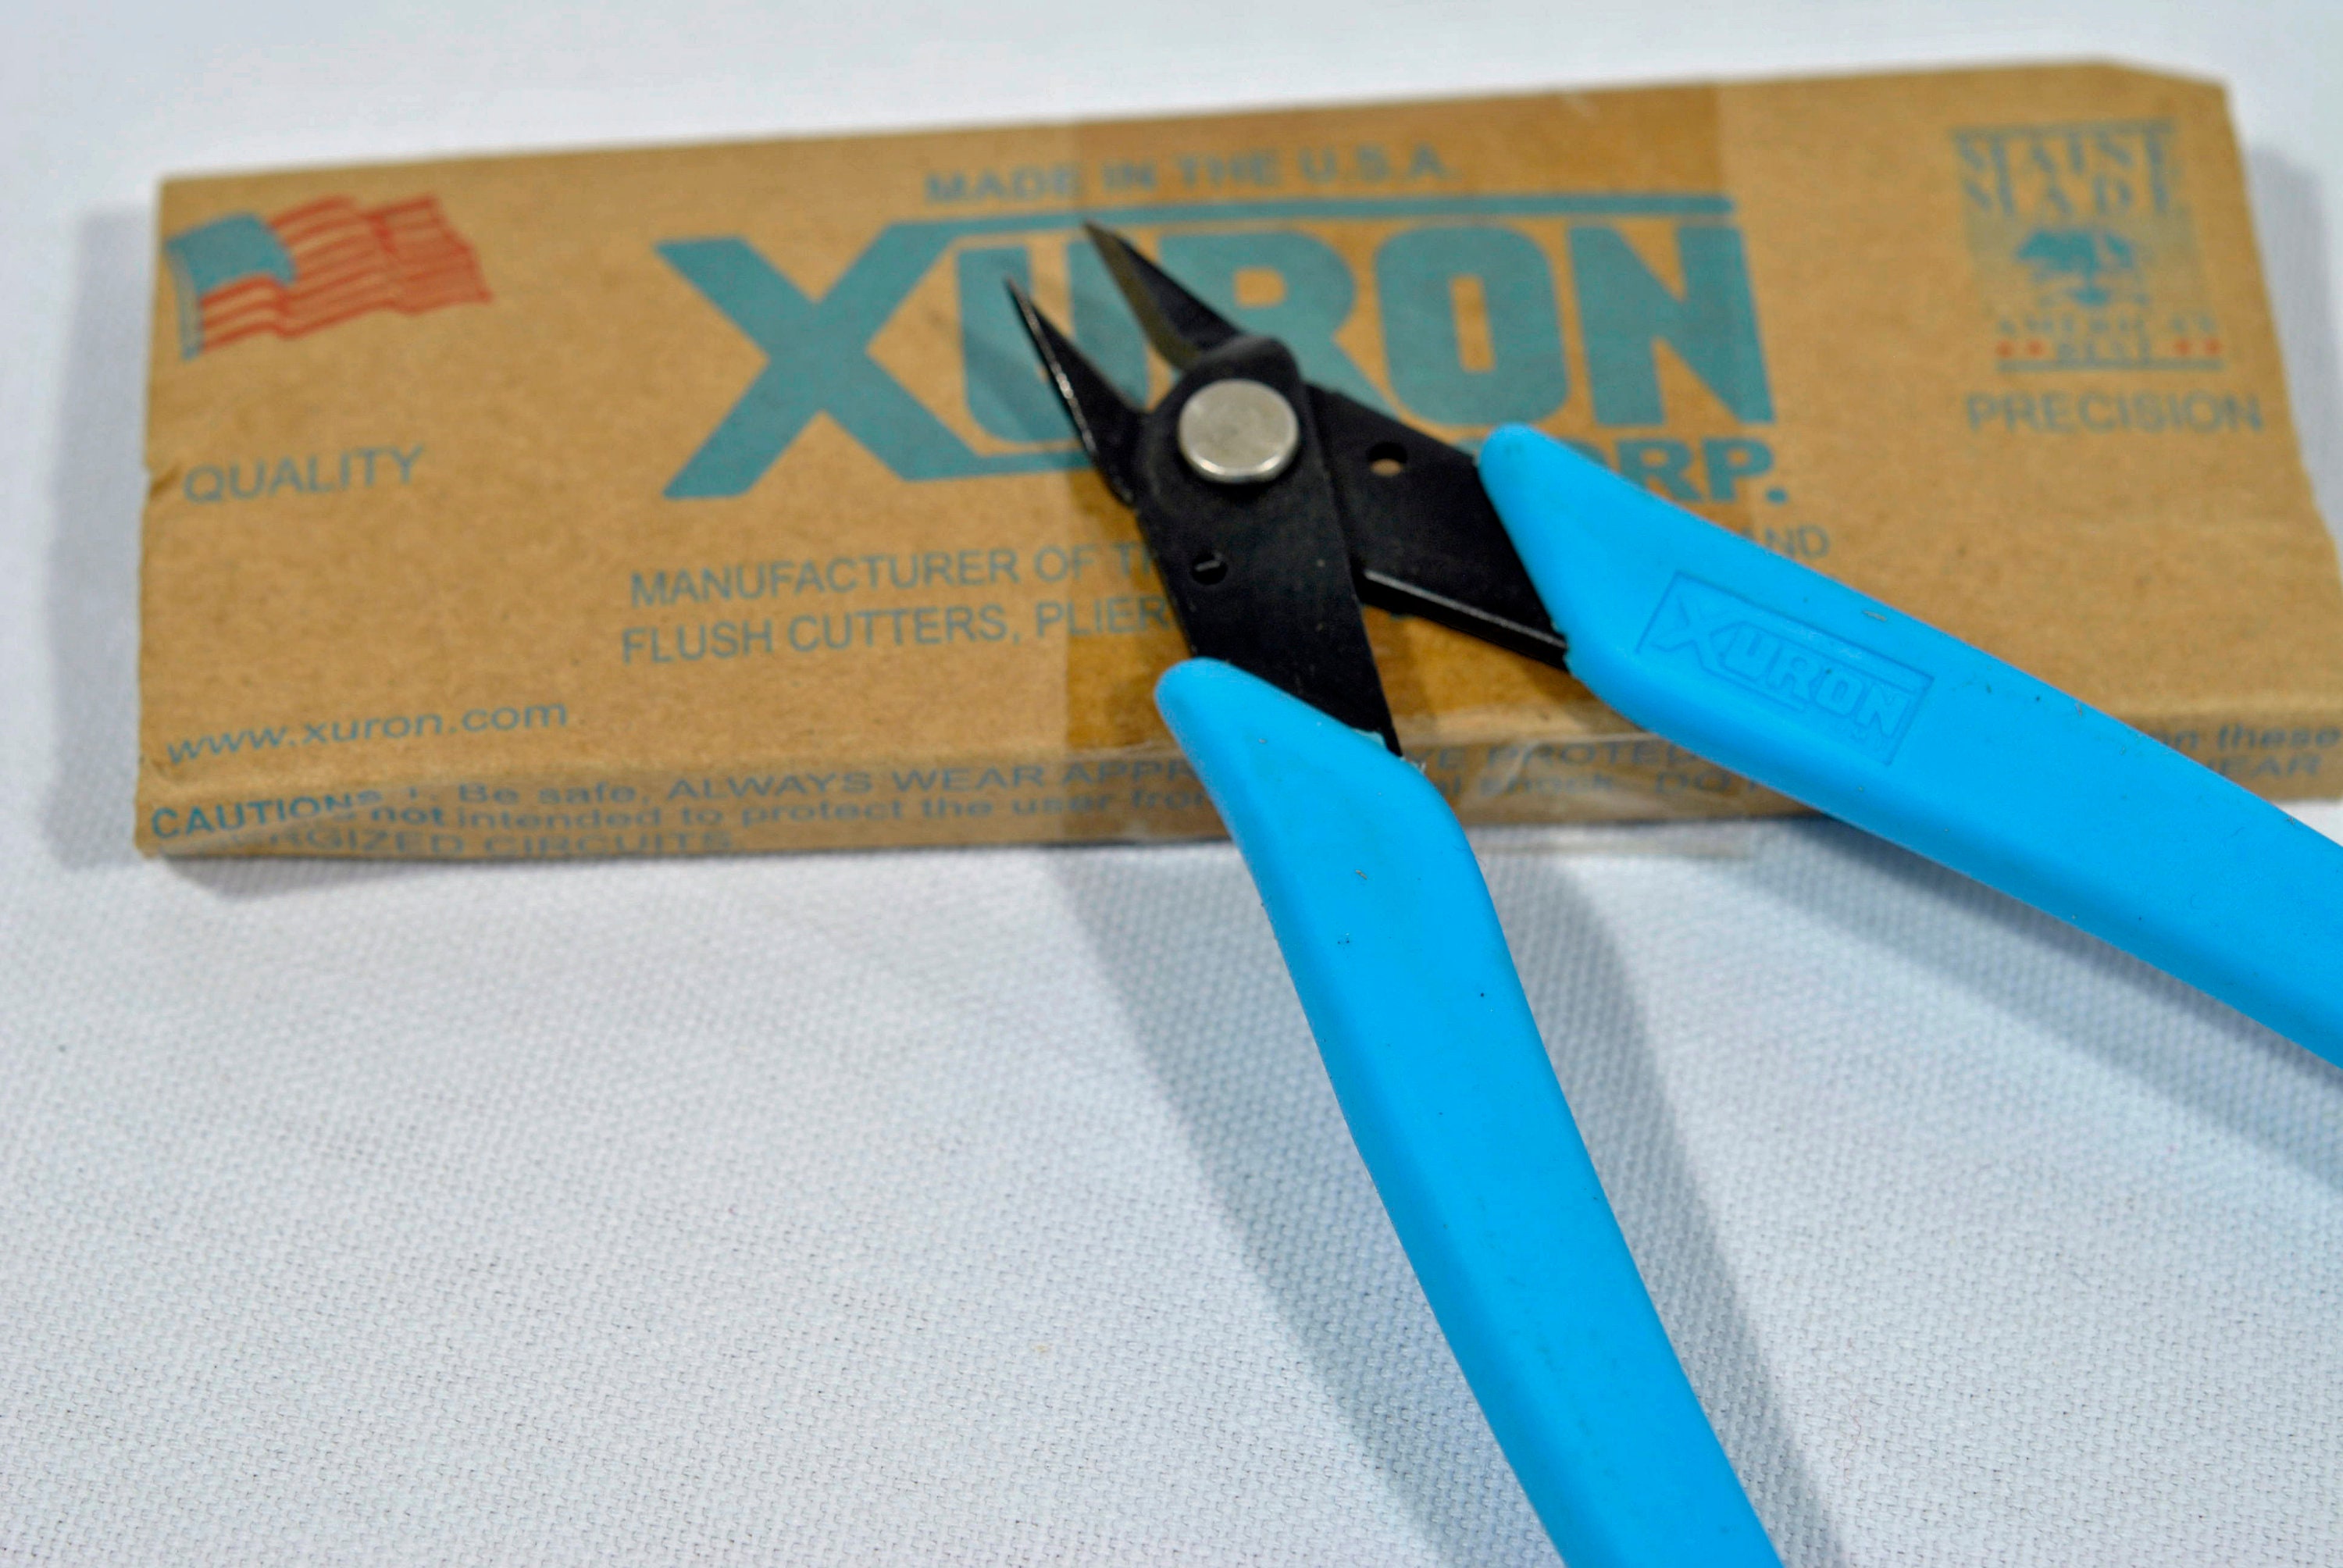 Xuron 170-II Micro-shear Flush Cutter Jewelry Beads Beading Wire